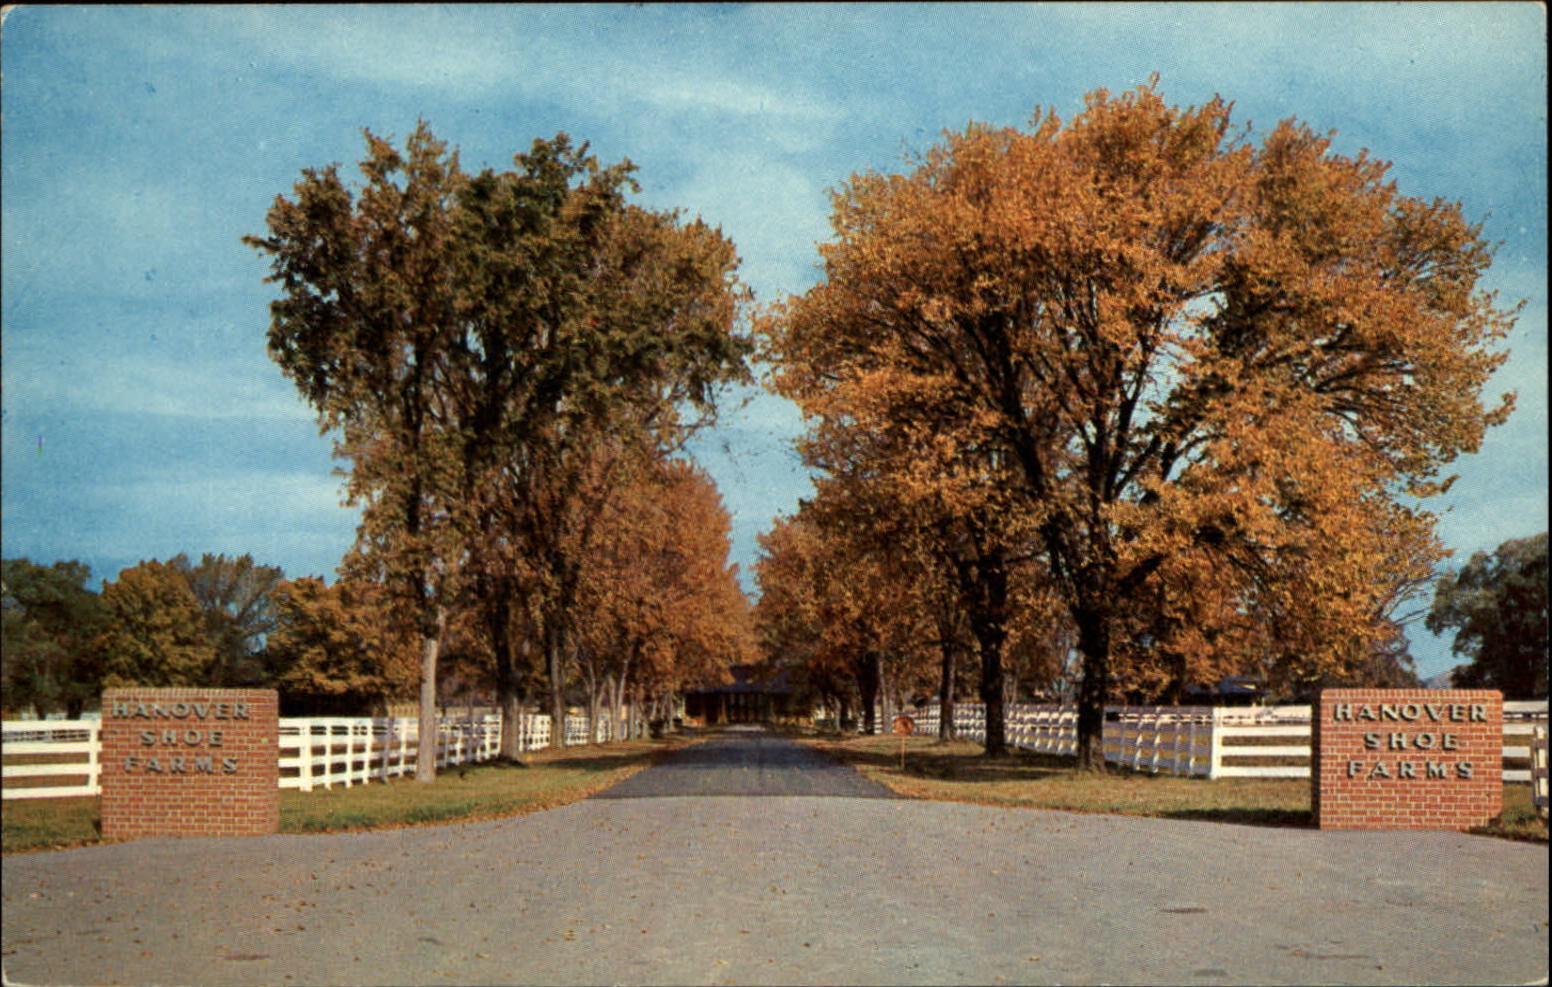 Hanover Pennsylvania Shoe Horse Farms entrance autumn foliage vintage postcard